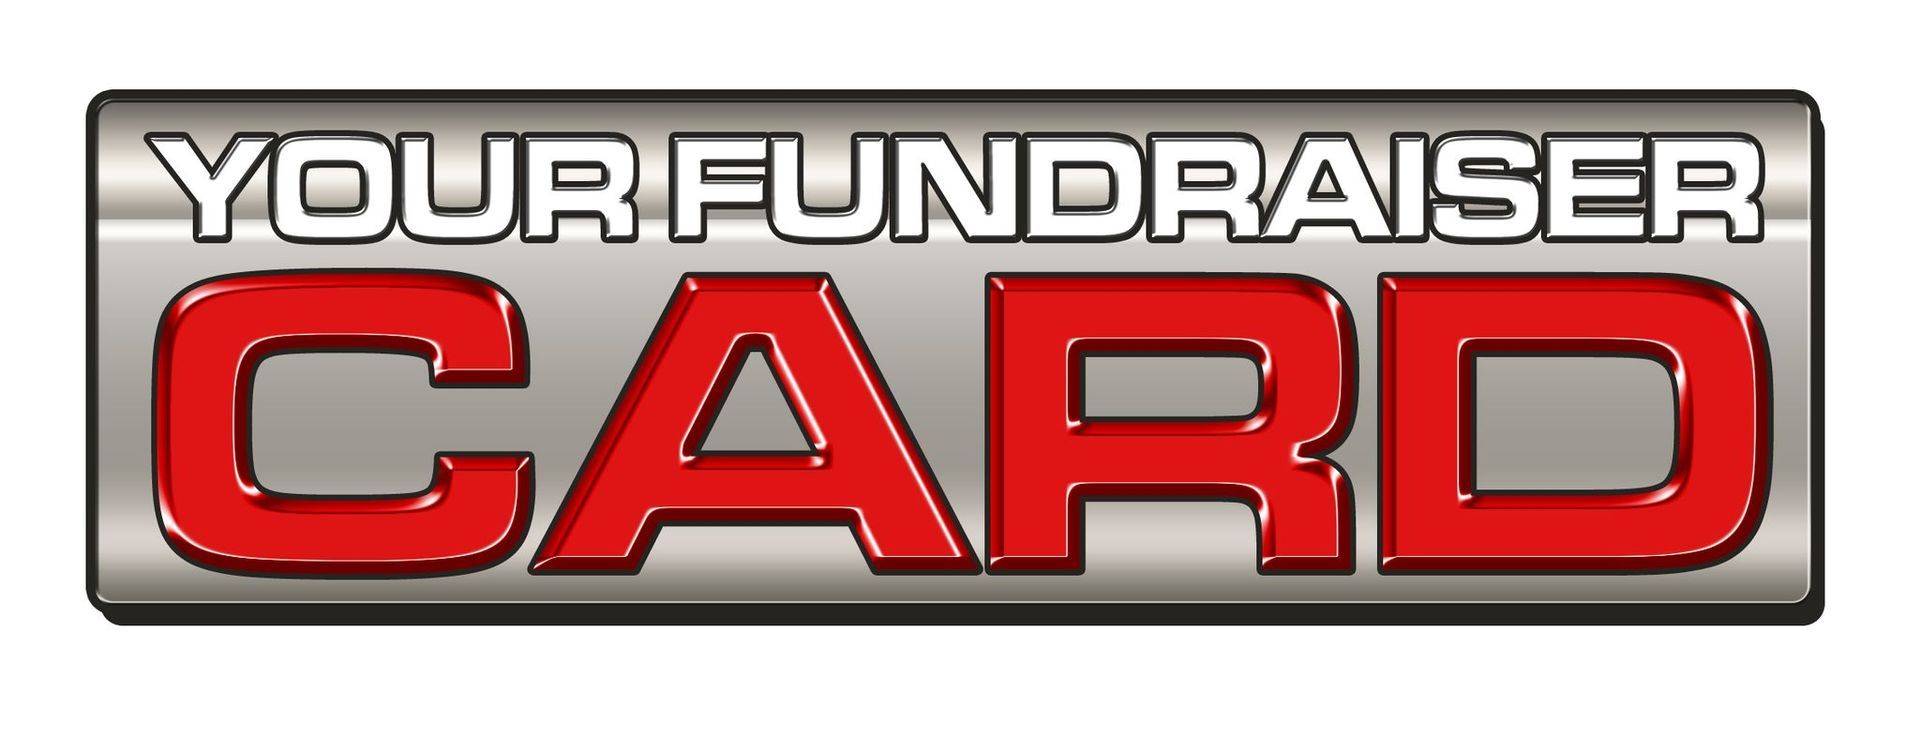 Your Fundraiser Card Logo